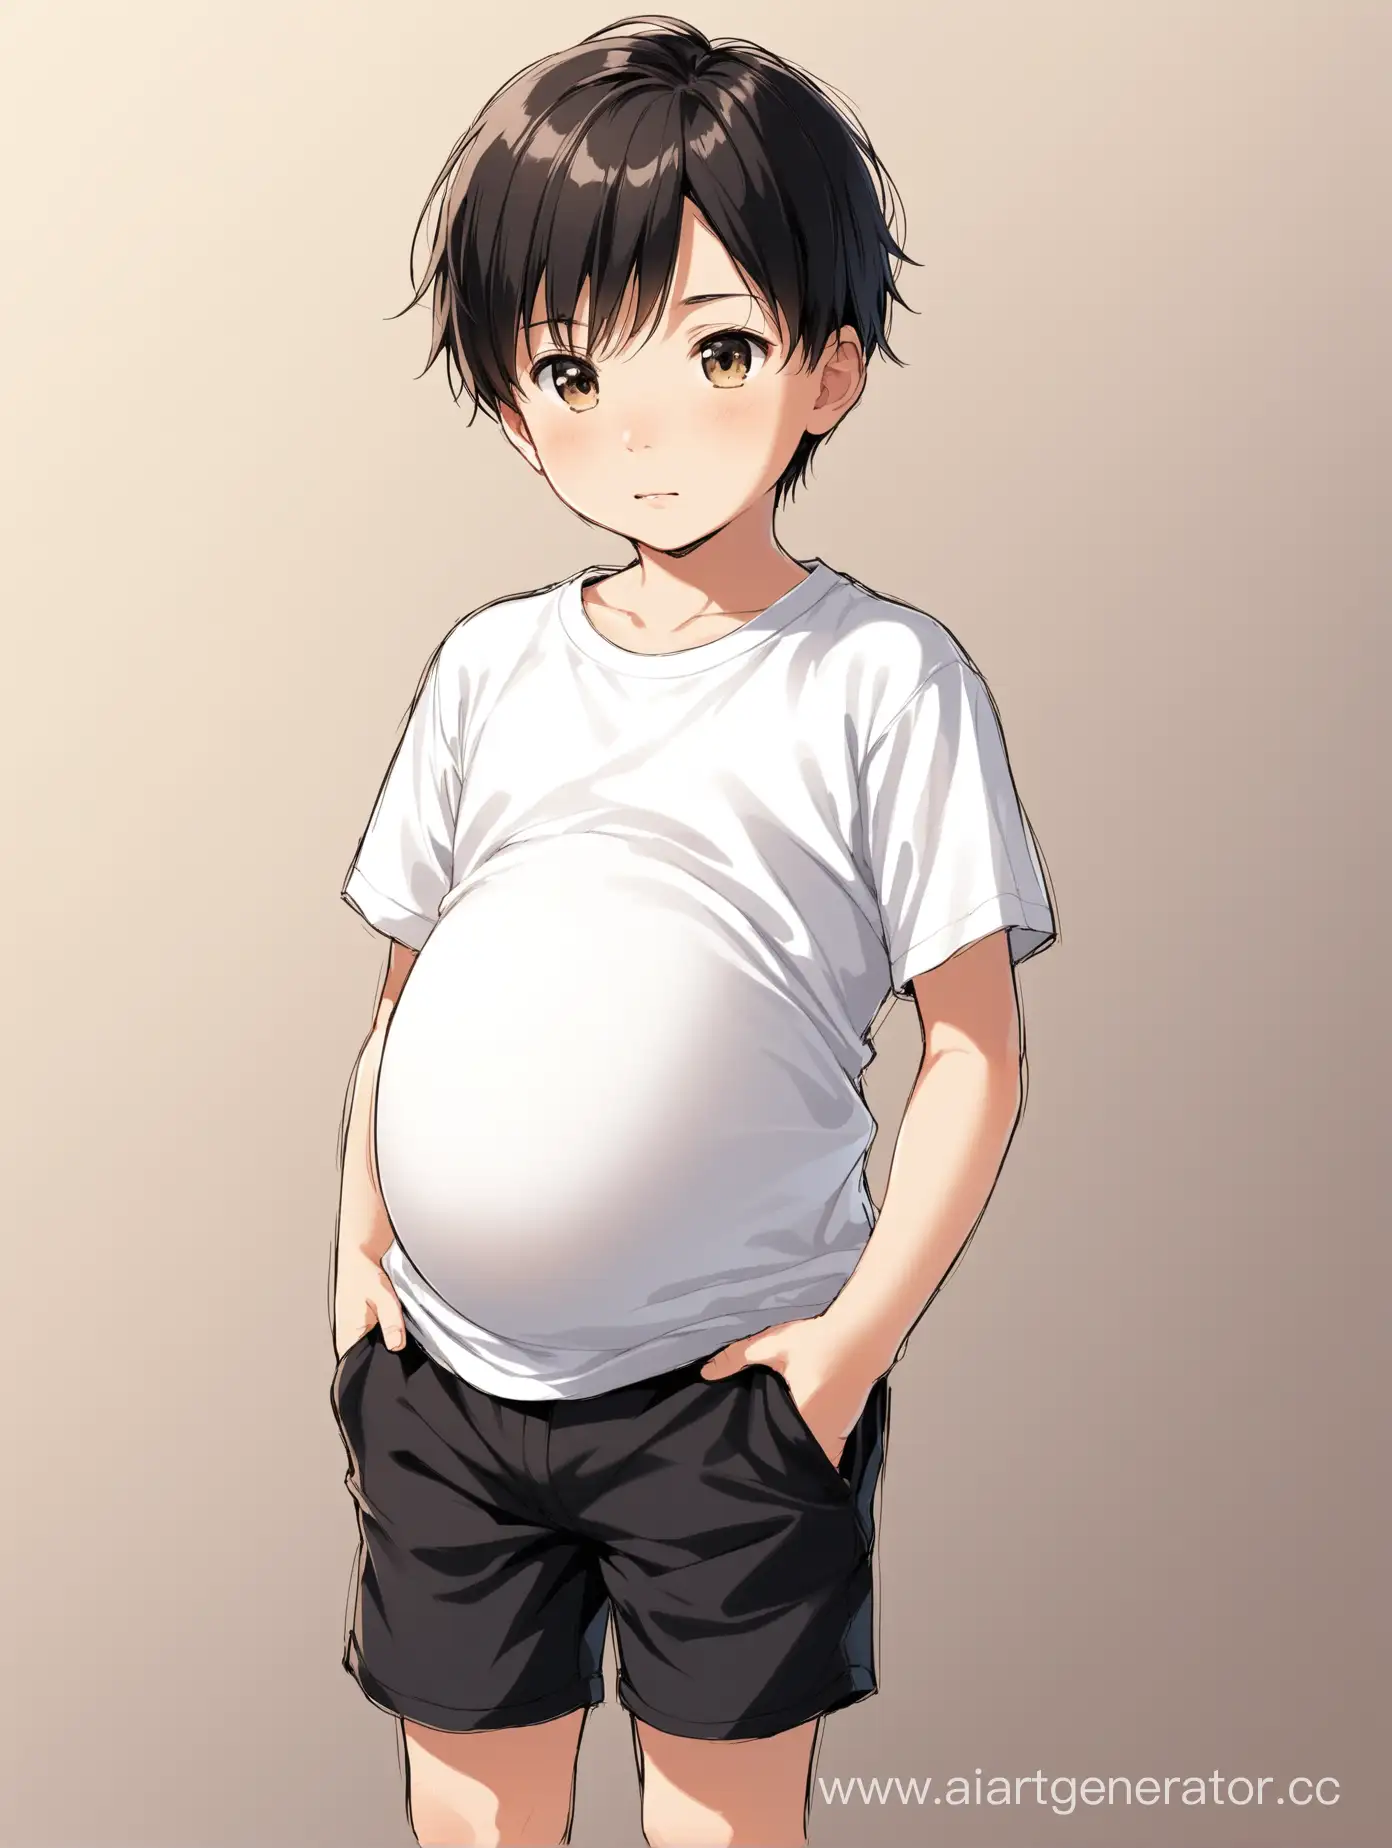 ThirteenYearOld-Boy-Wearing-White-TShirt-and-Black-Shorts-in-Unusual-Pregnancy-Scenario